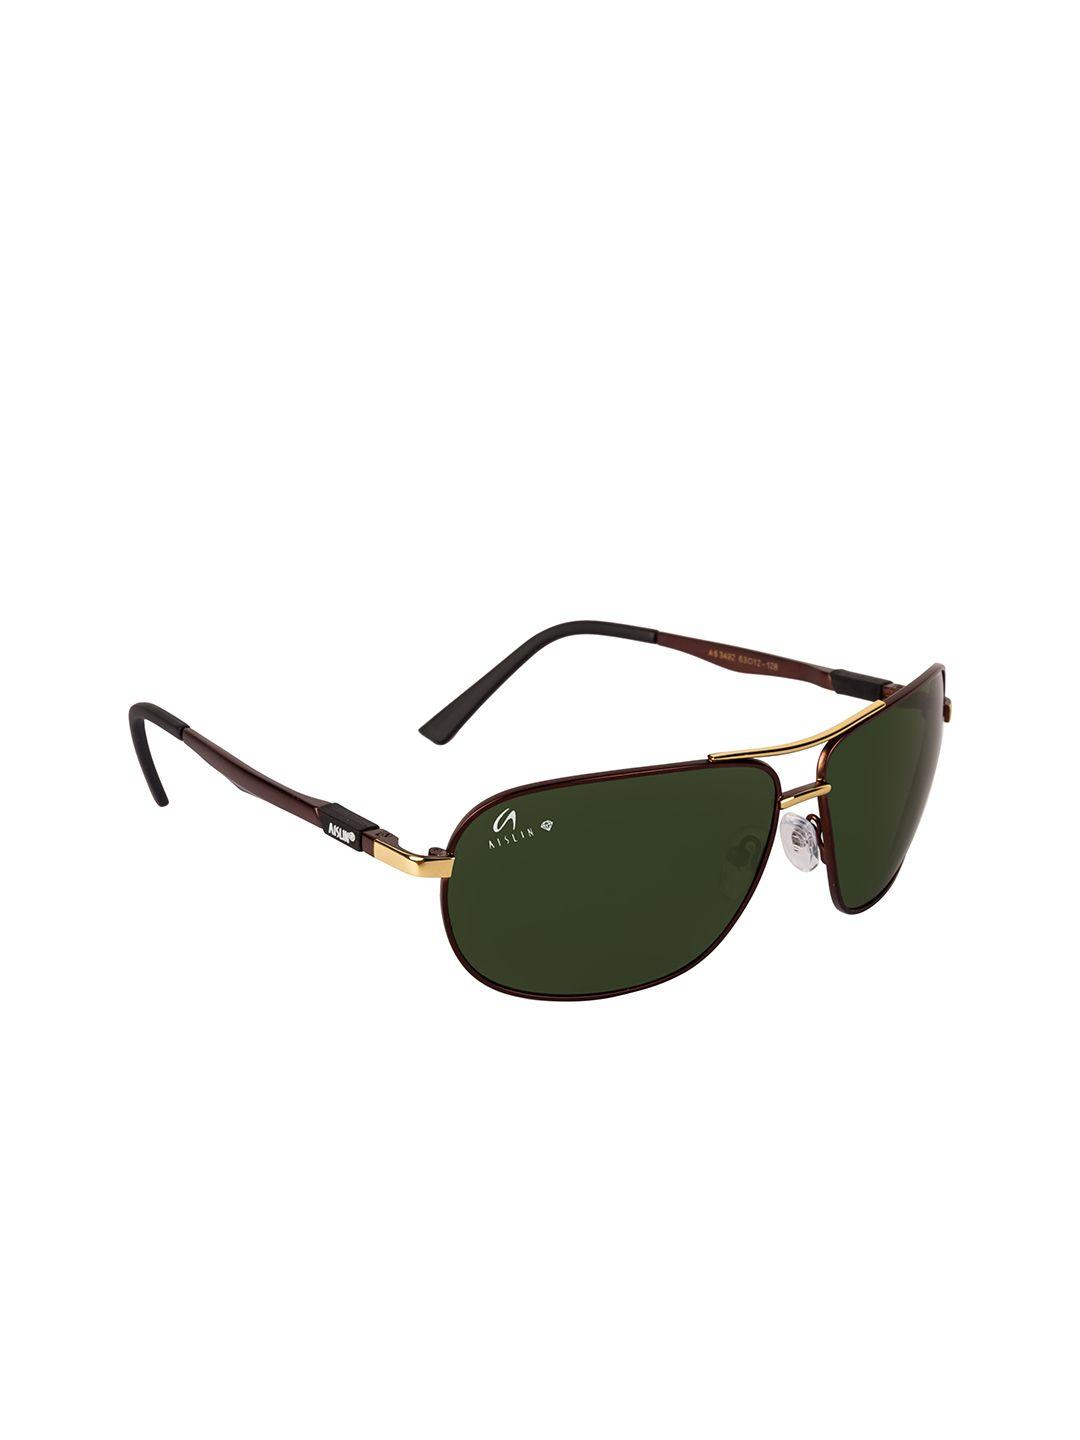 aislin men green lens & gold-toned wayfarer sunglasses with uv protected lens